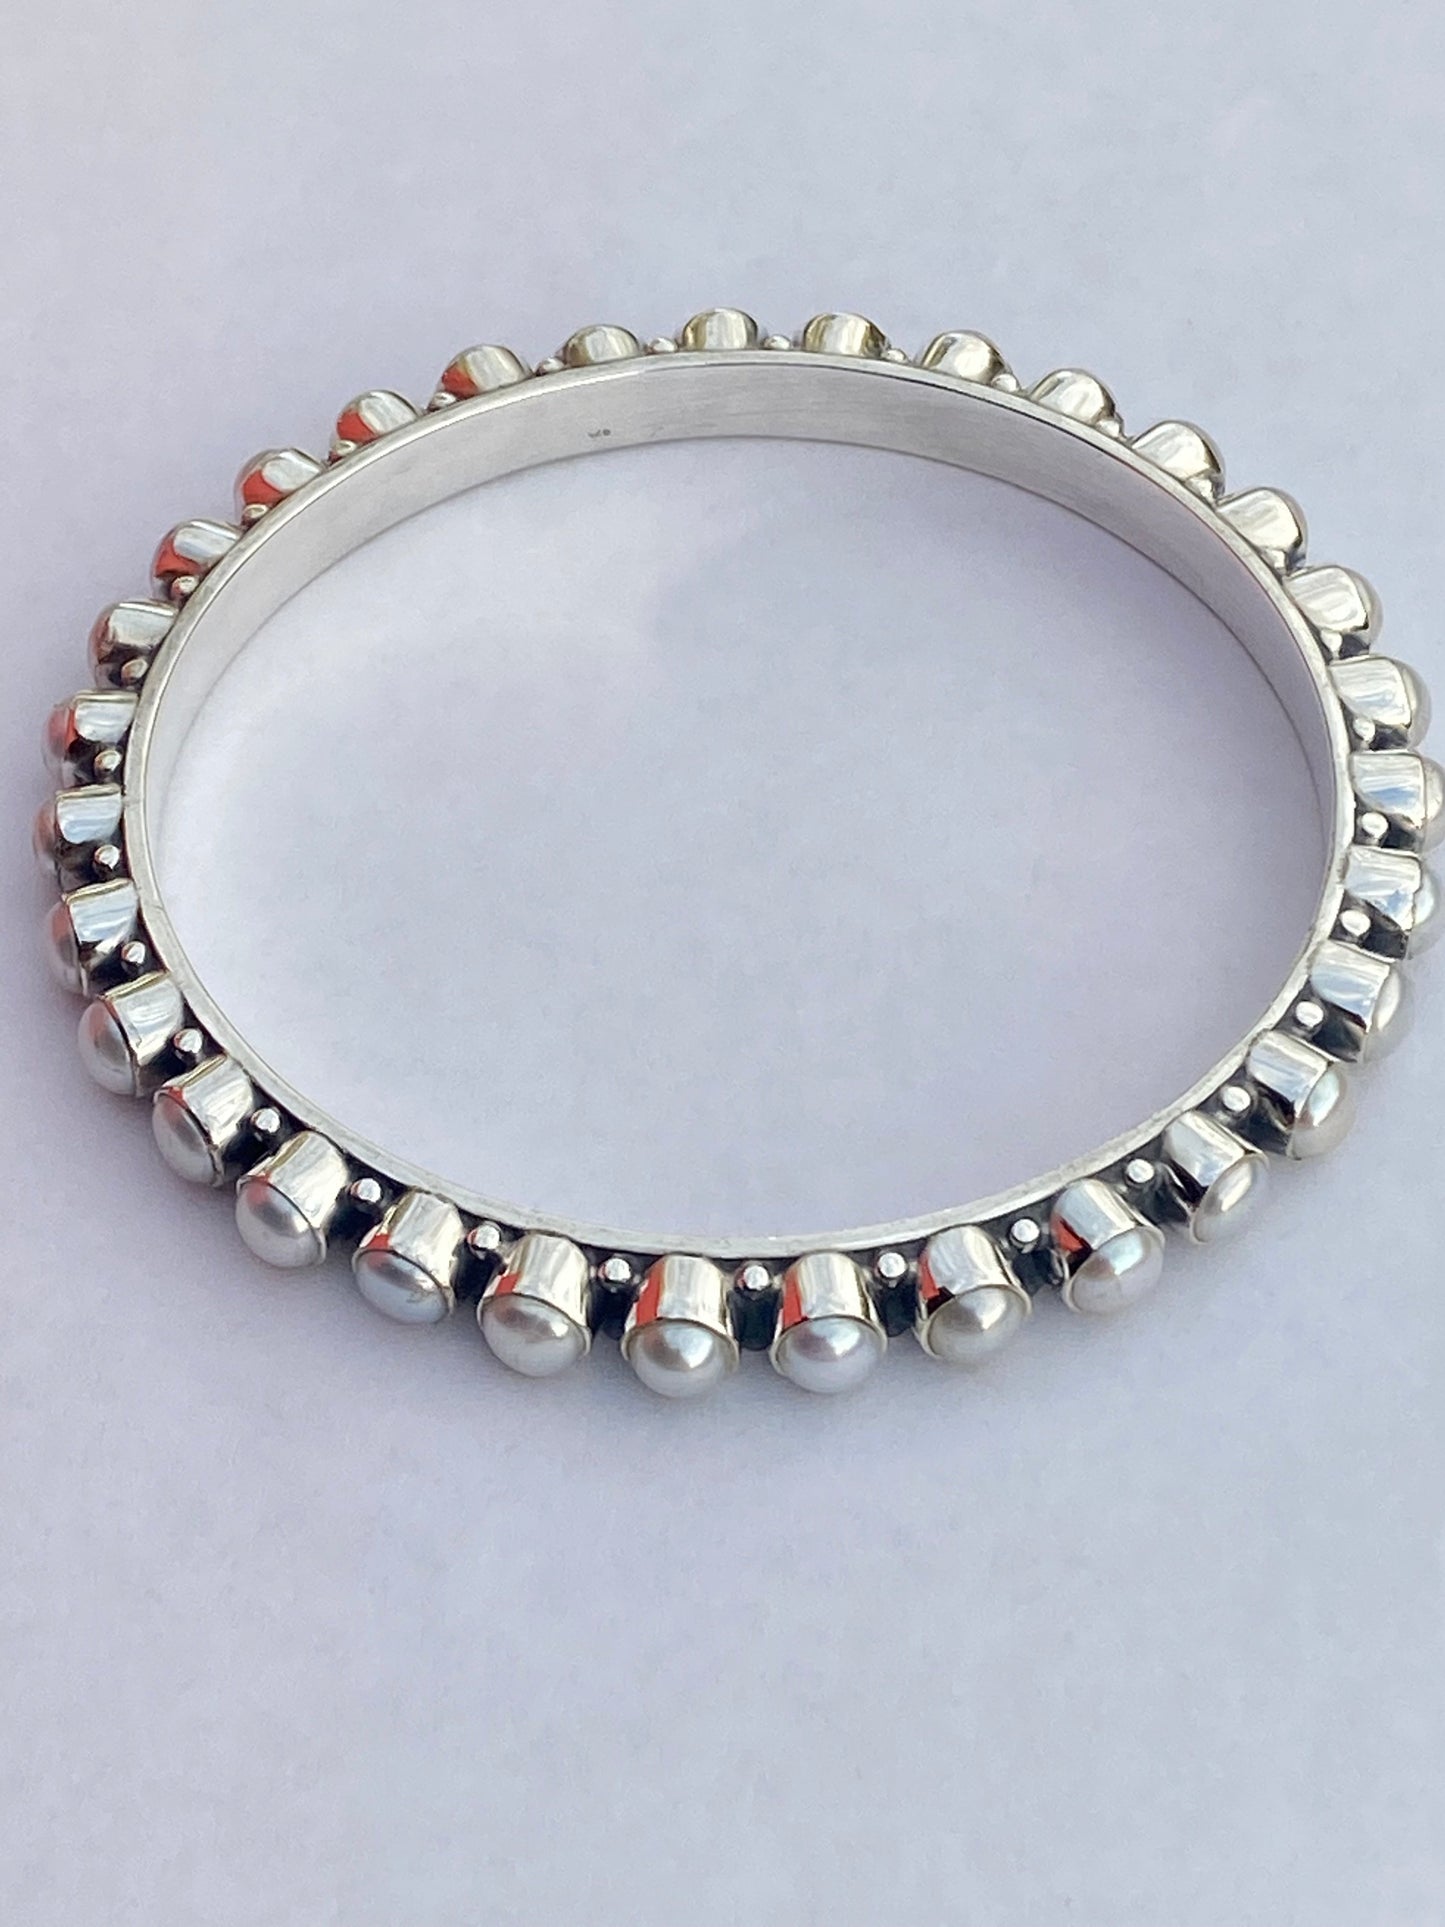 Handmade 6mm Fresh Water Pearl & Sterling Silver 8 inch Bangle Bracelet